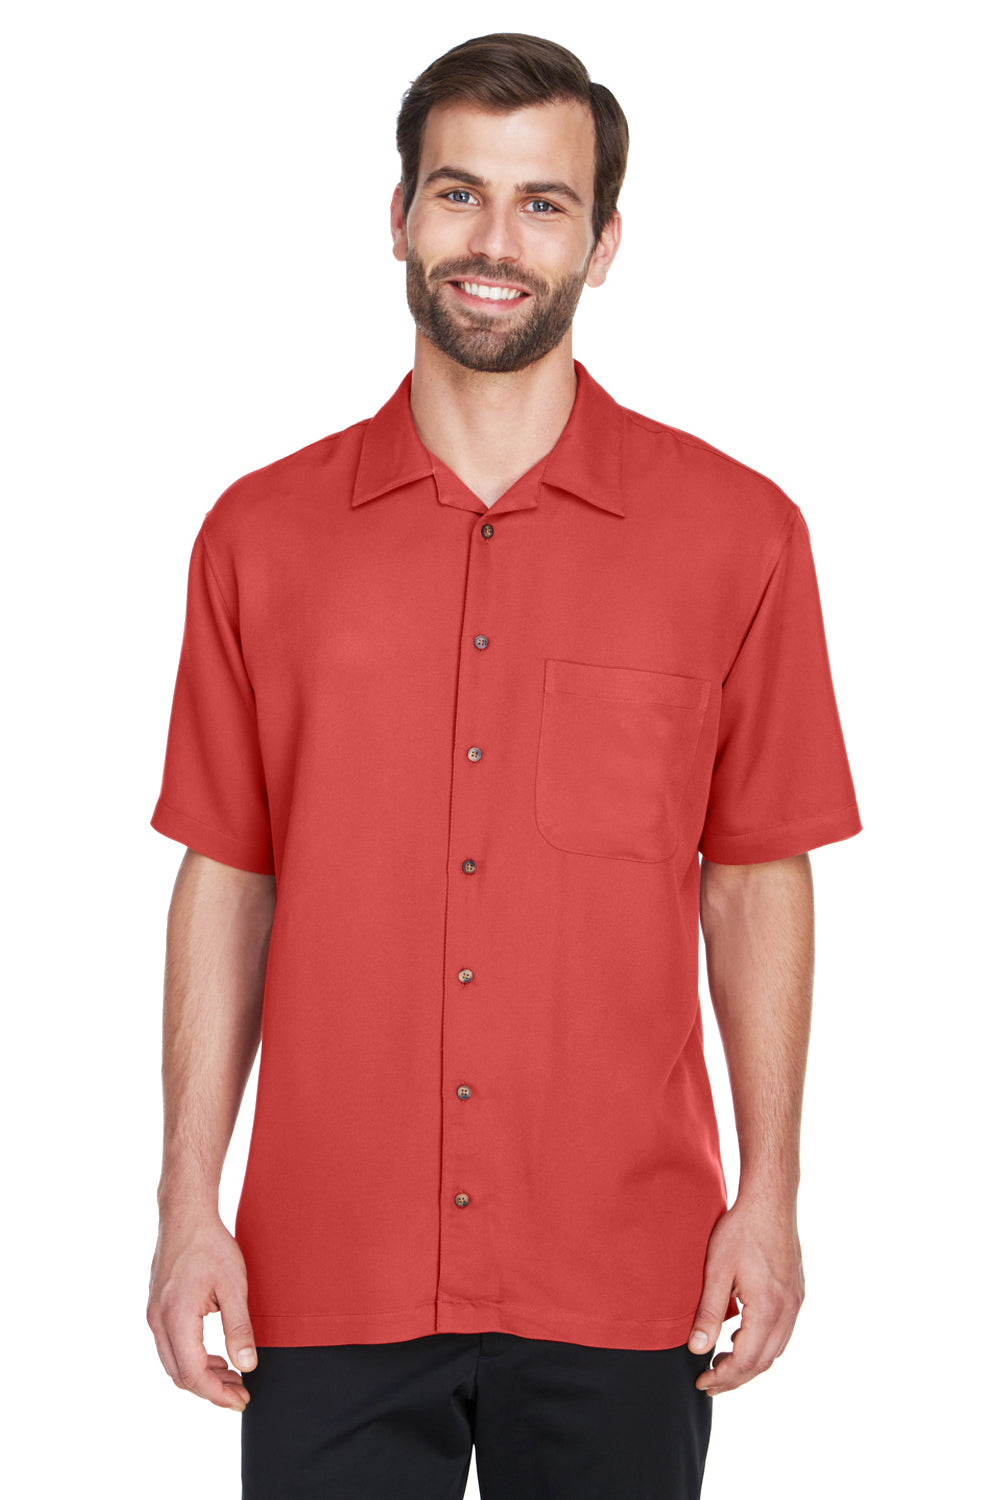 UltraClub 8980 Mens Cabana Breeze Short Sleeve Button Down Camp Shirt w/ Pocket Brick Red Front